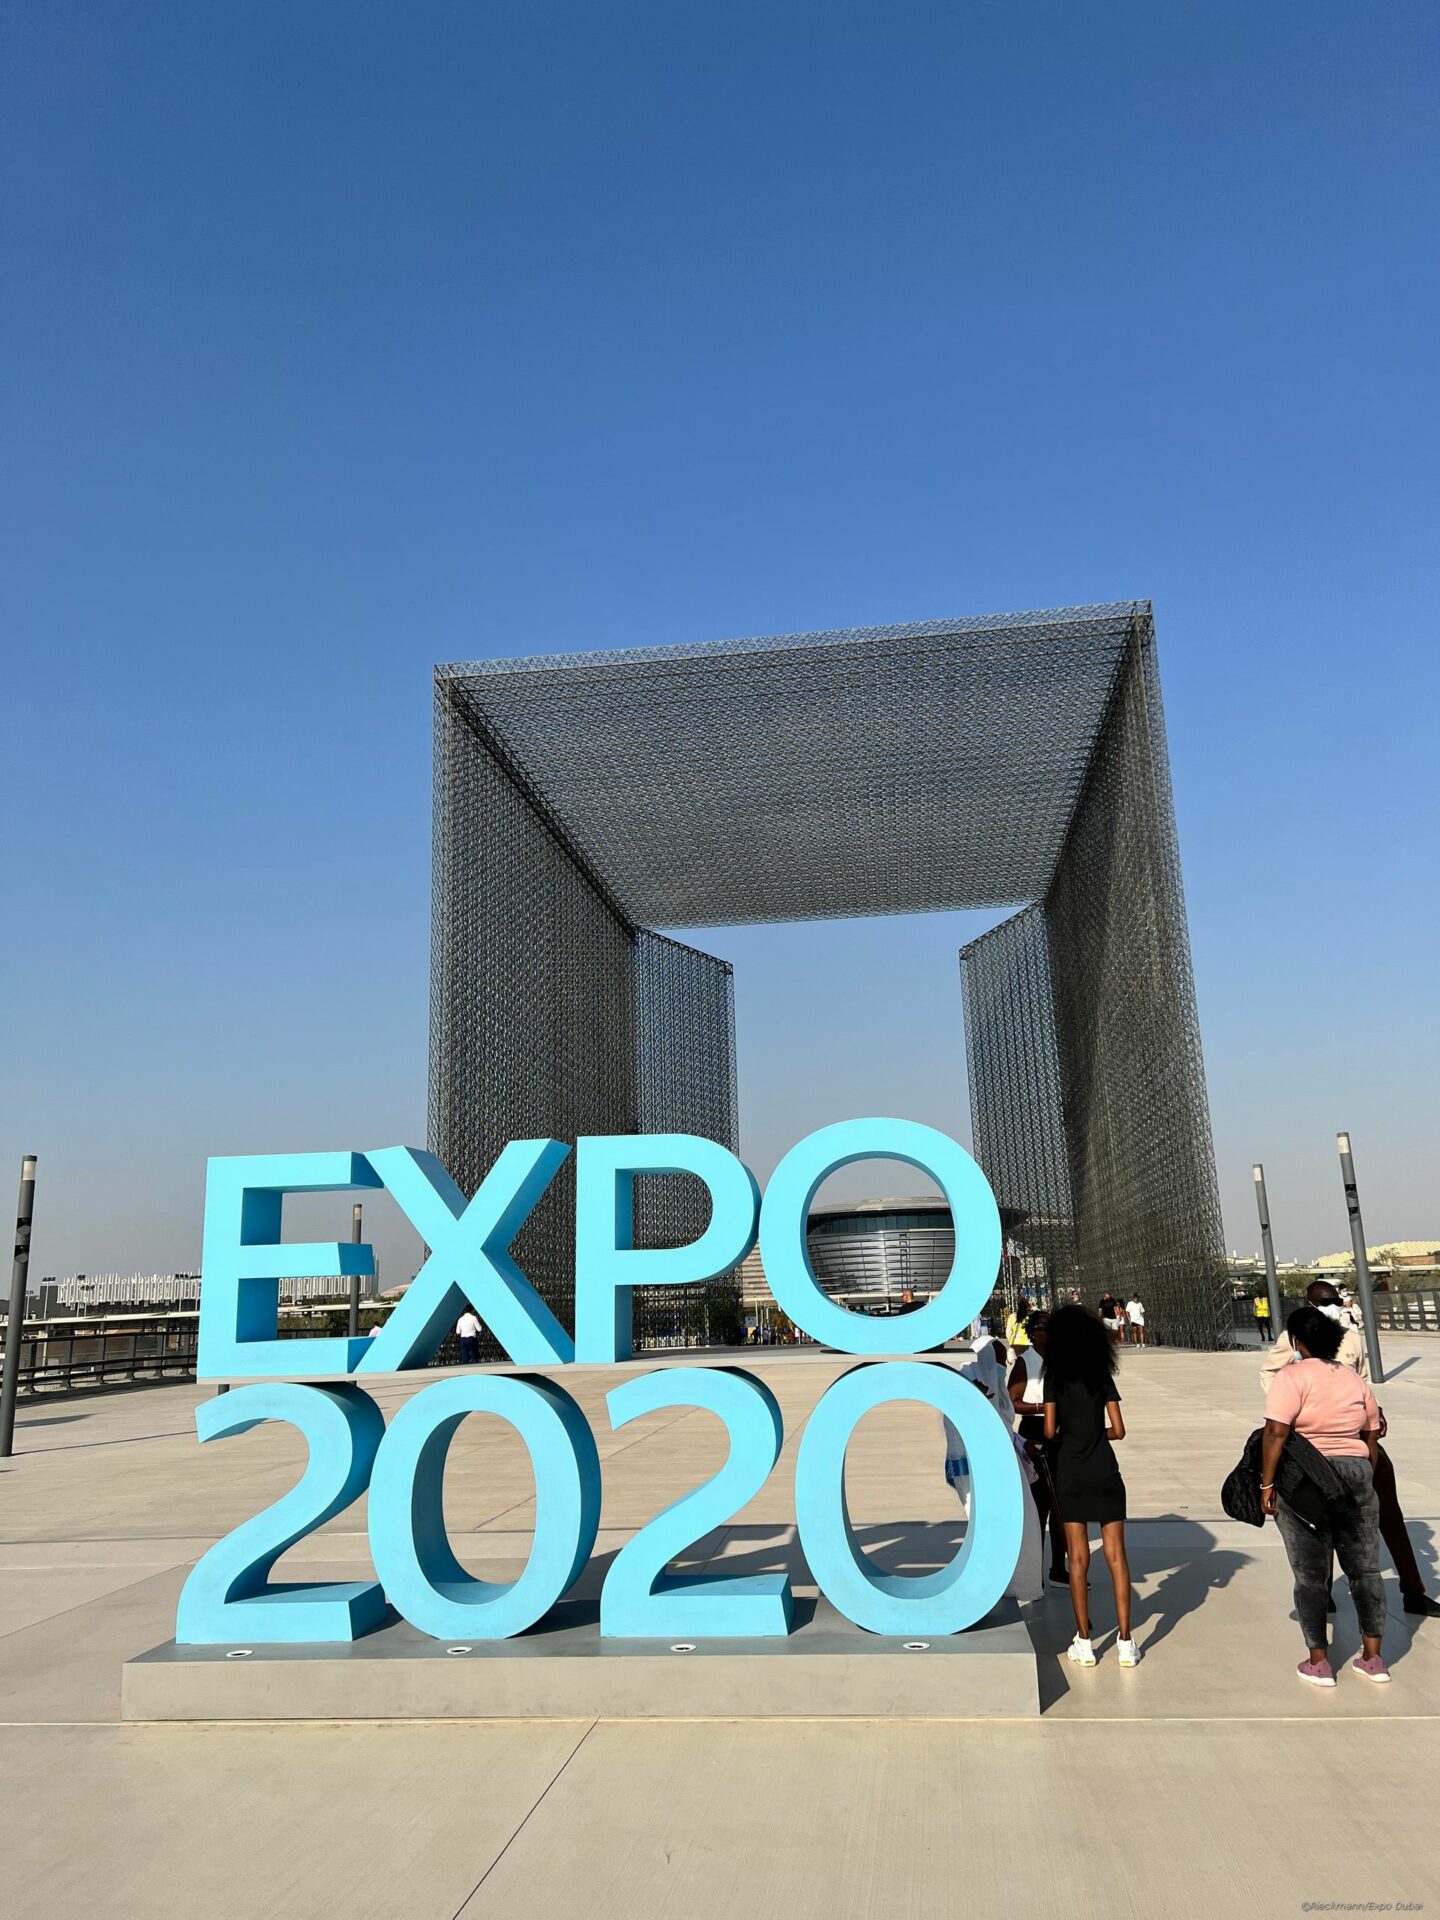 Expo2020